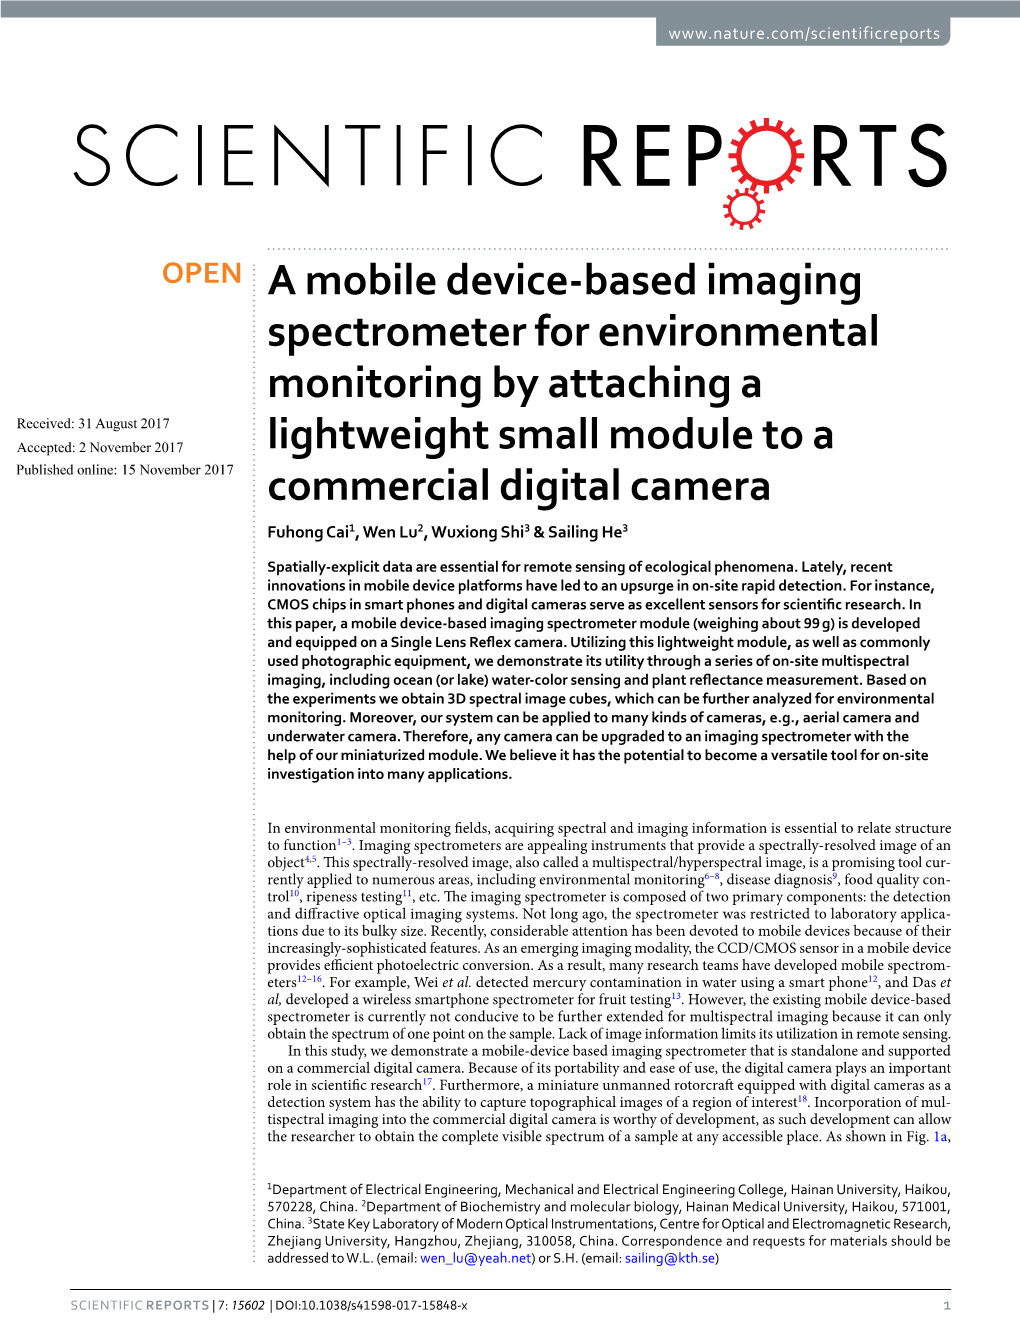 A Mobile Device-Based Imaging Spectrometer for Environmental